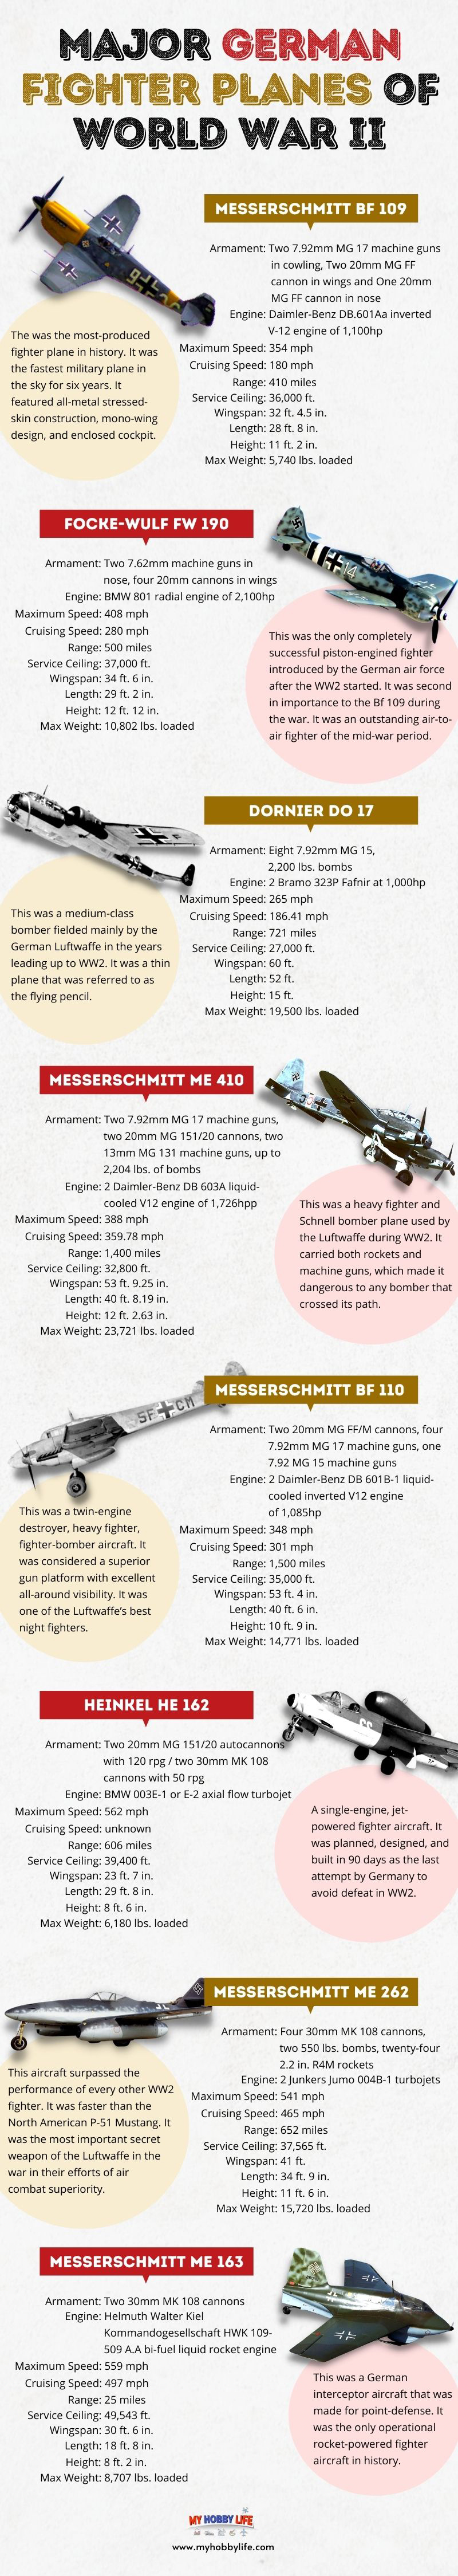 Major German Fighter Planes of World War II